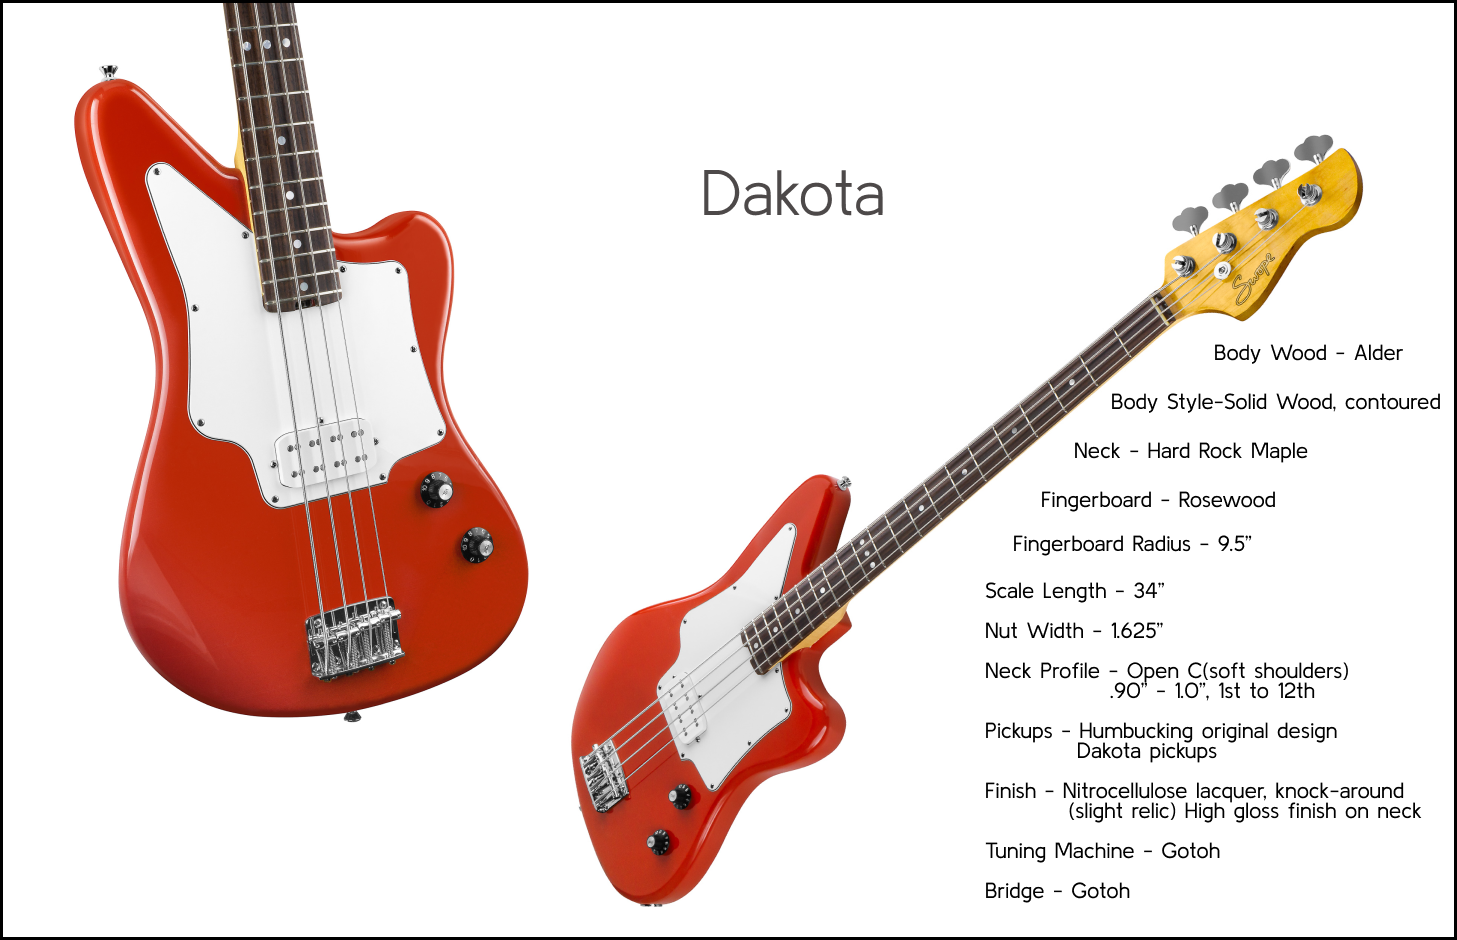 Picture of Dakota guitar.